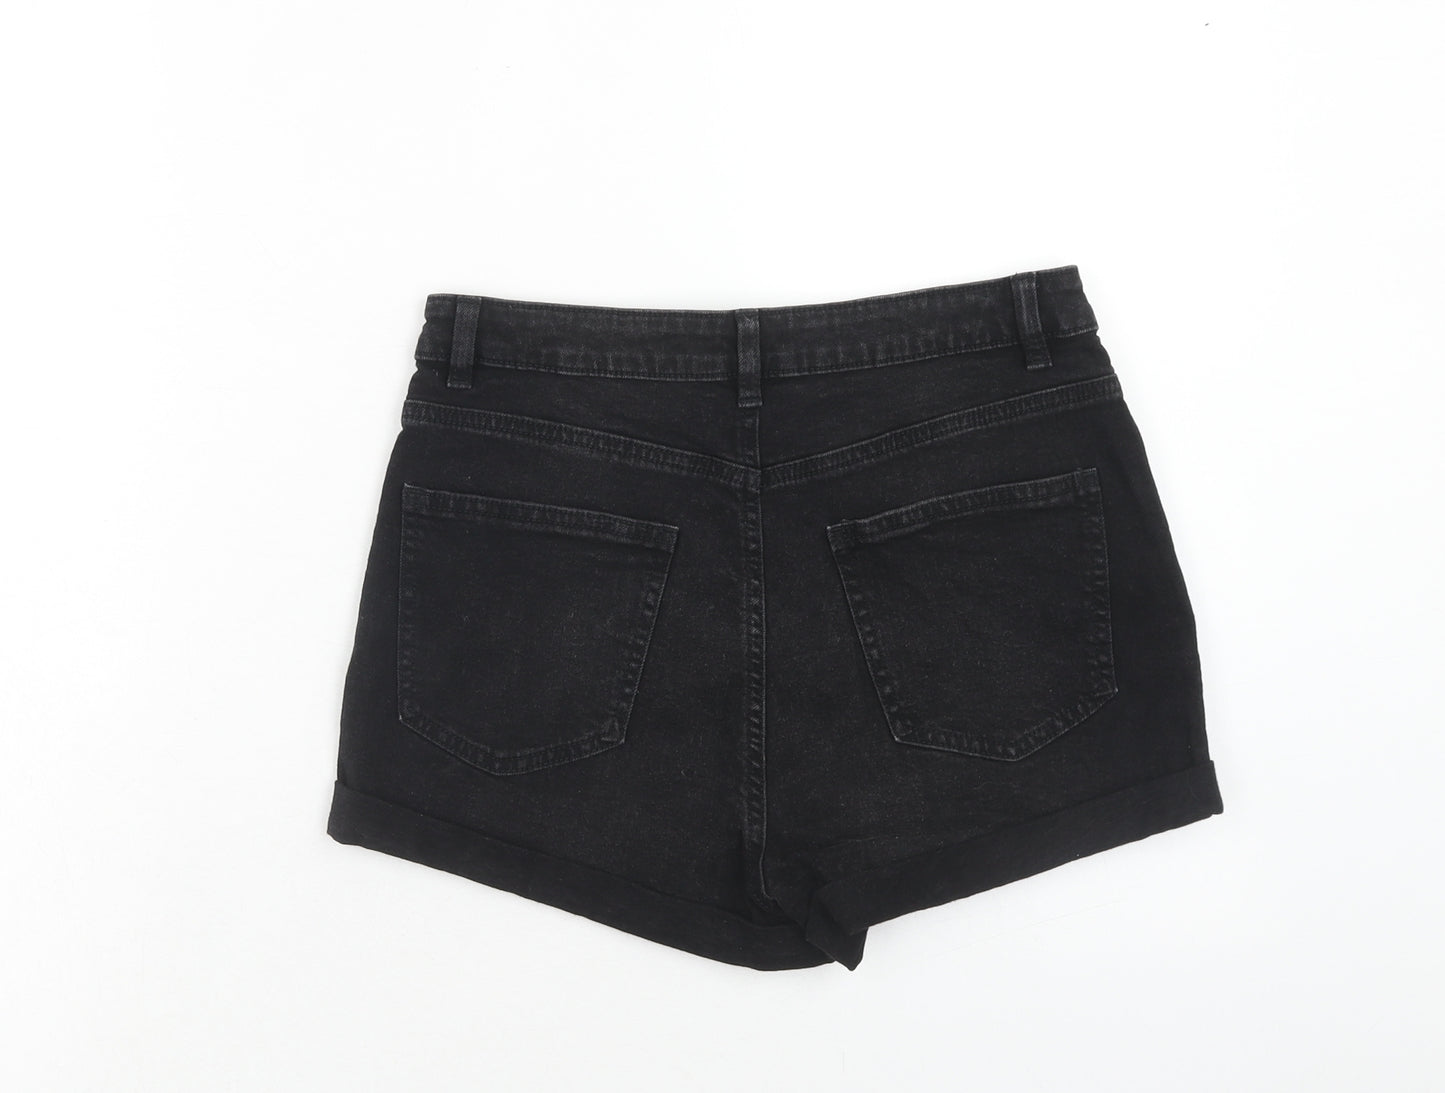 Denim & Co. Womens Black Cotton Hot Pants Shorts Size 10 Regular Button